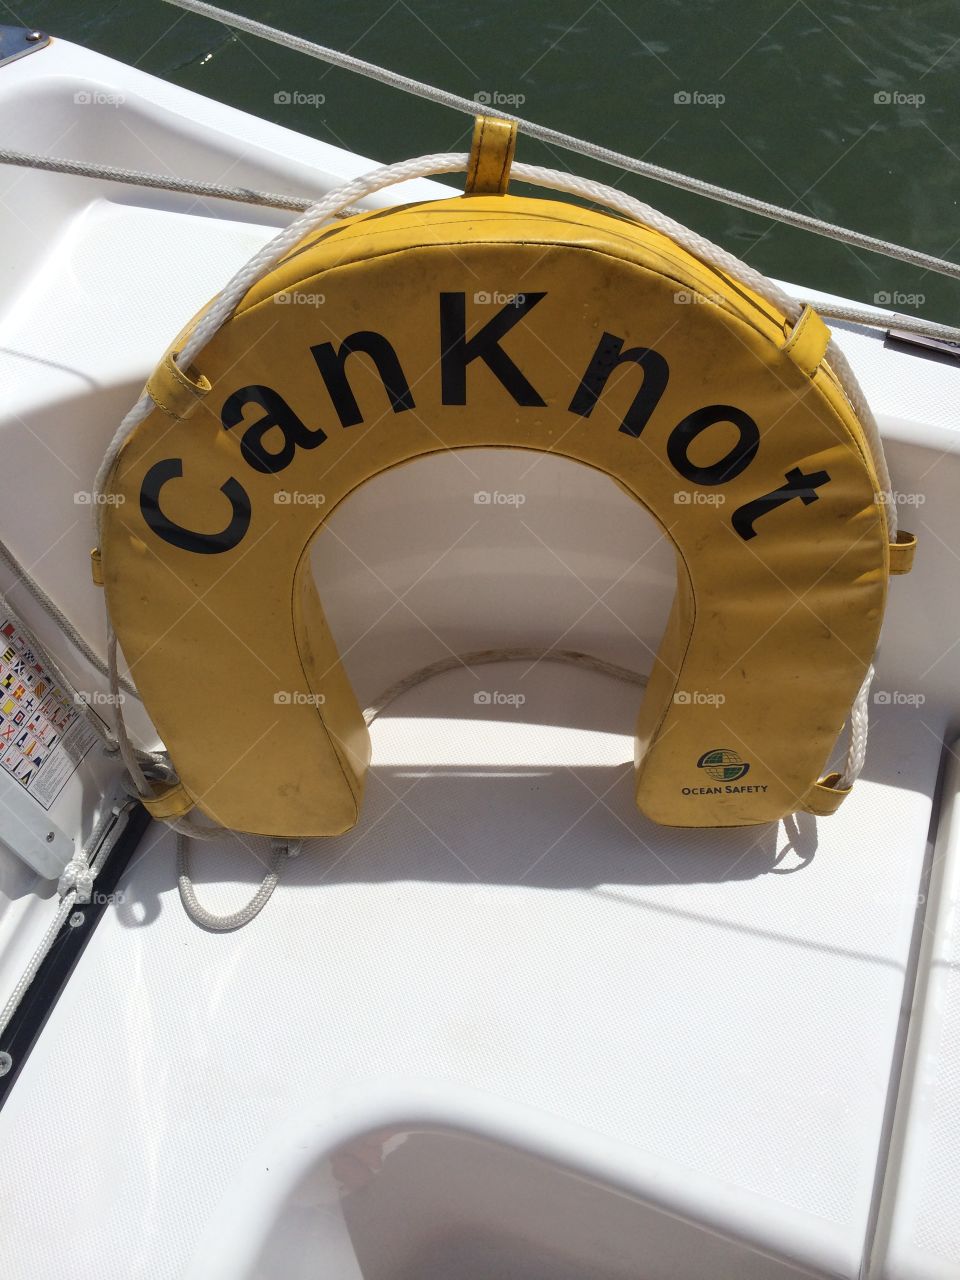 Sailing humour lifesaver. Life saver humour 